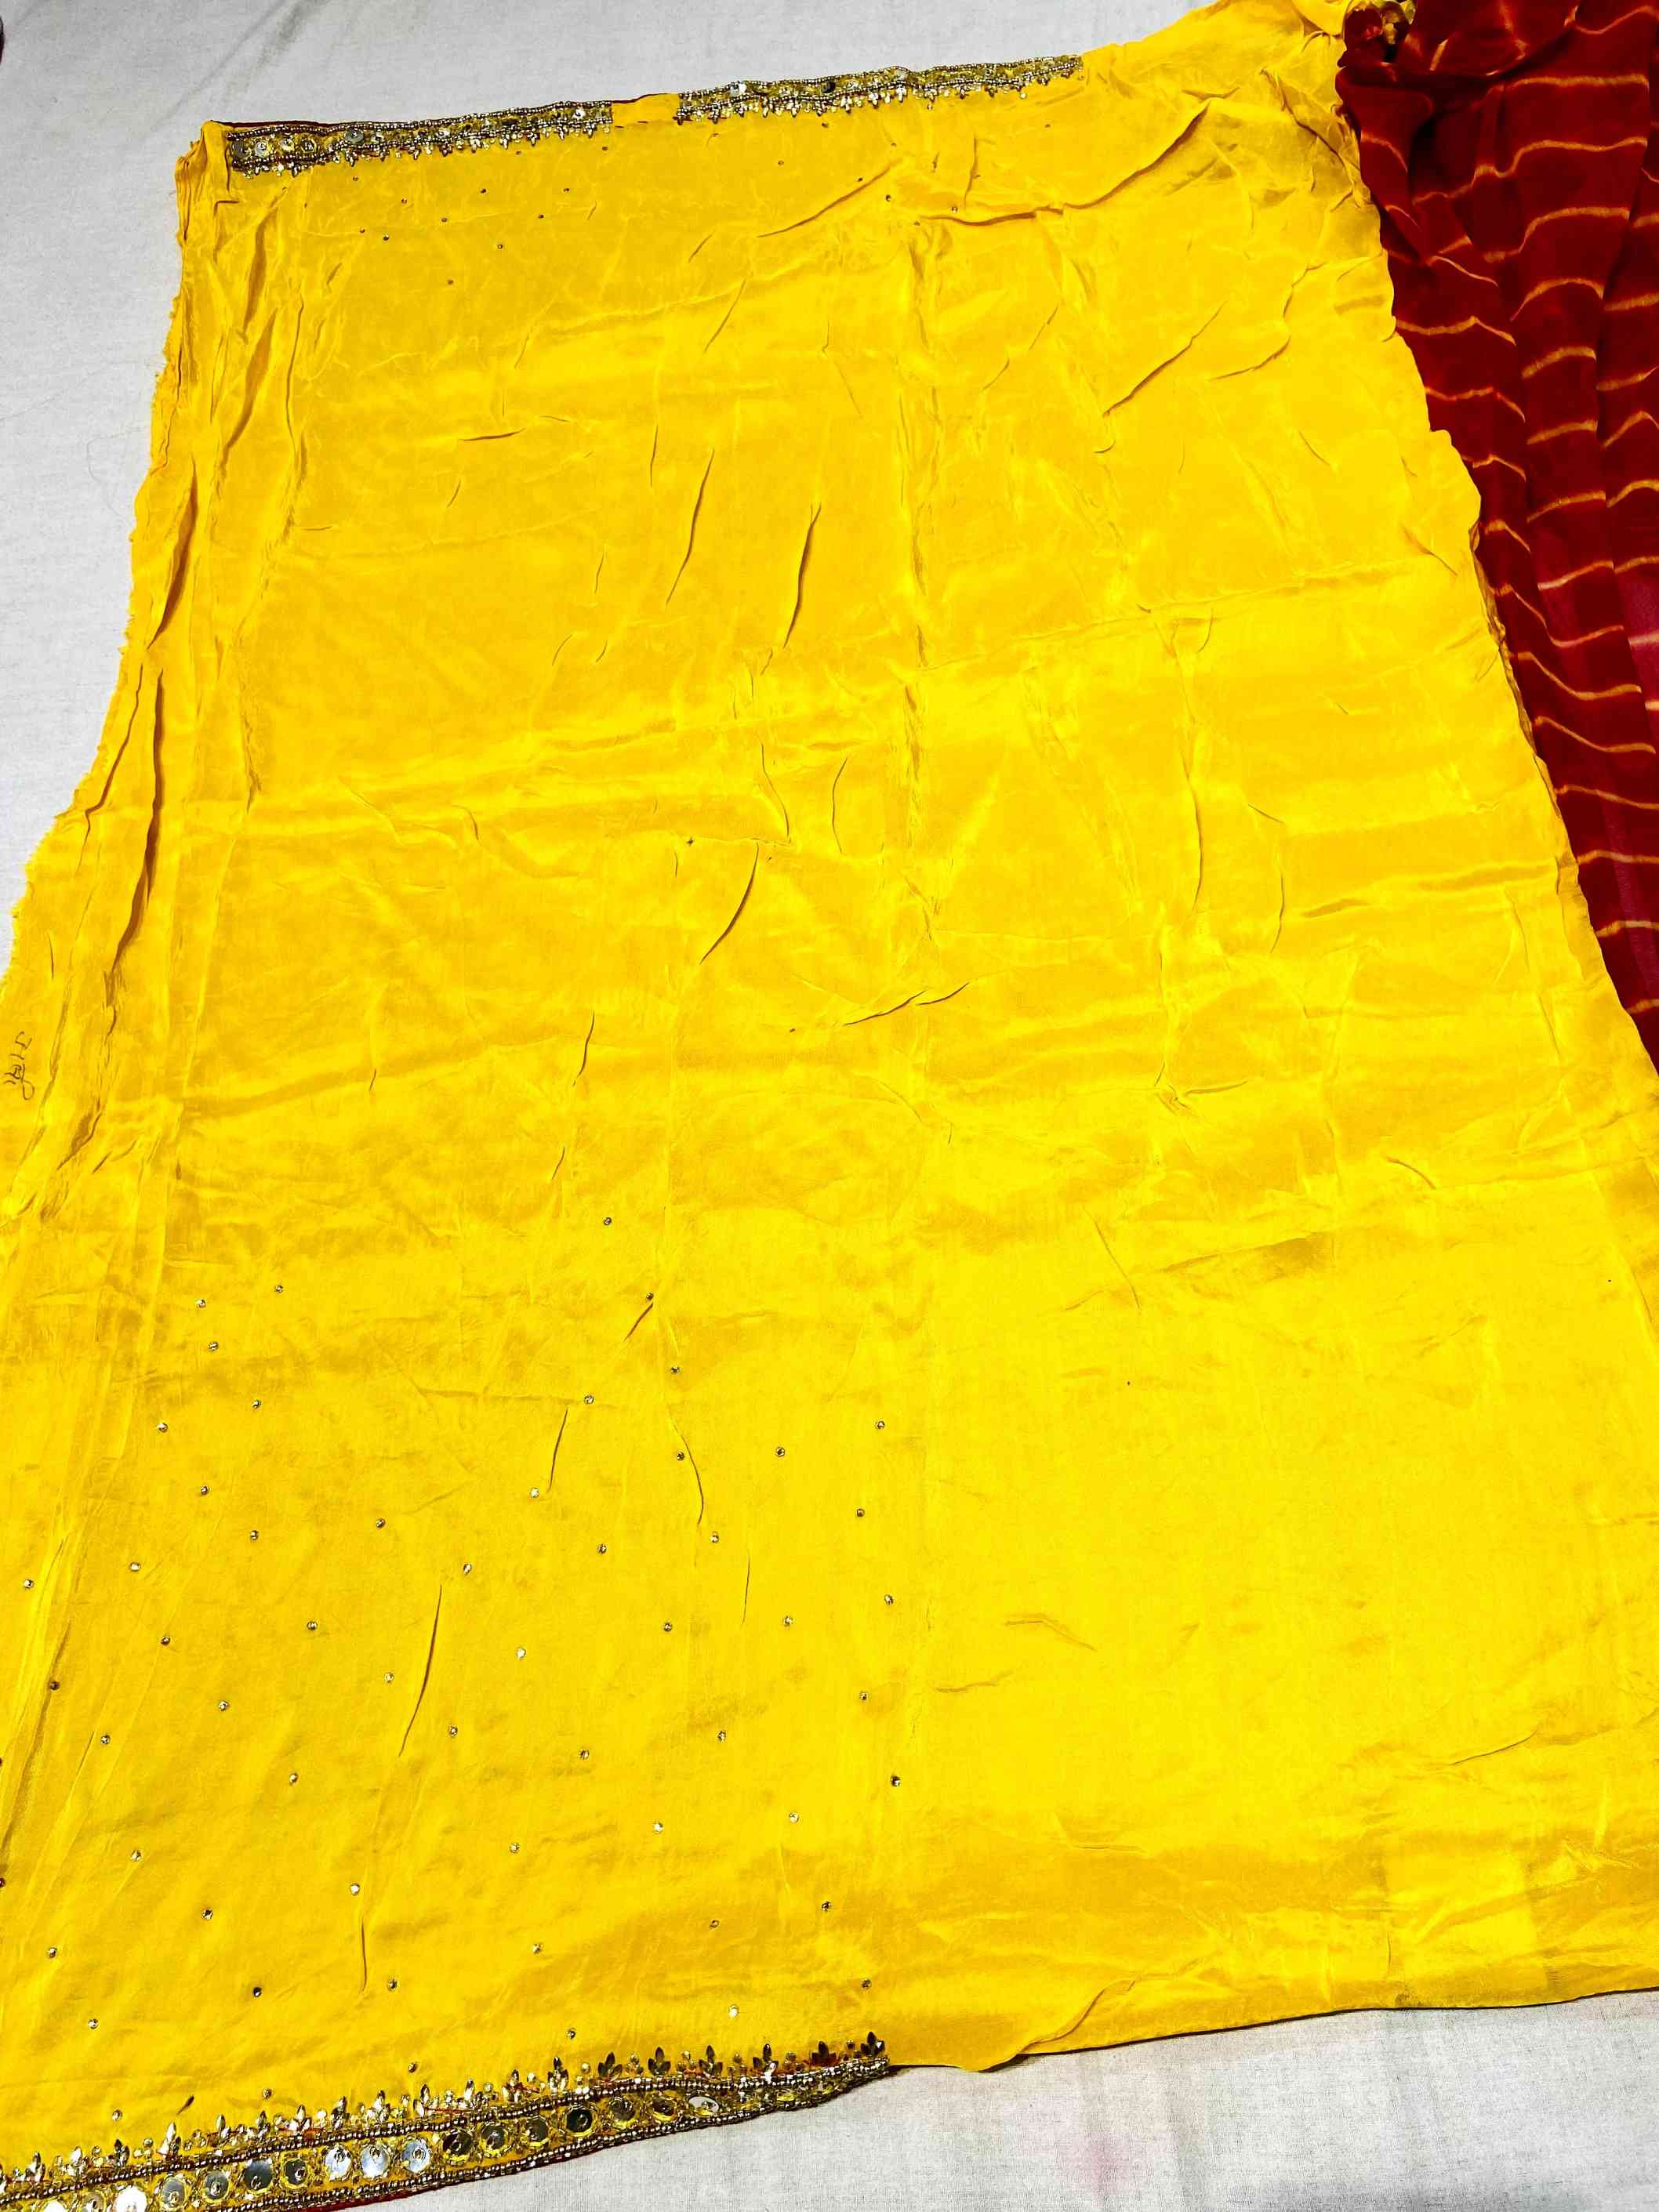 Red & Yellow Chiffon Leheriya Saree